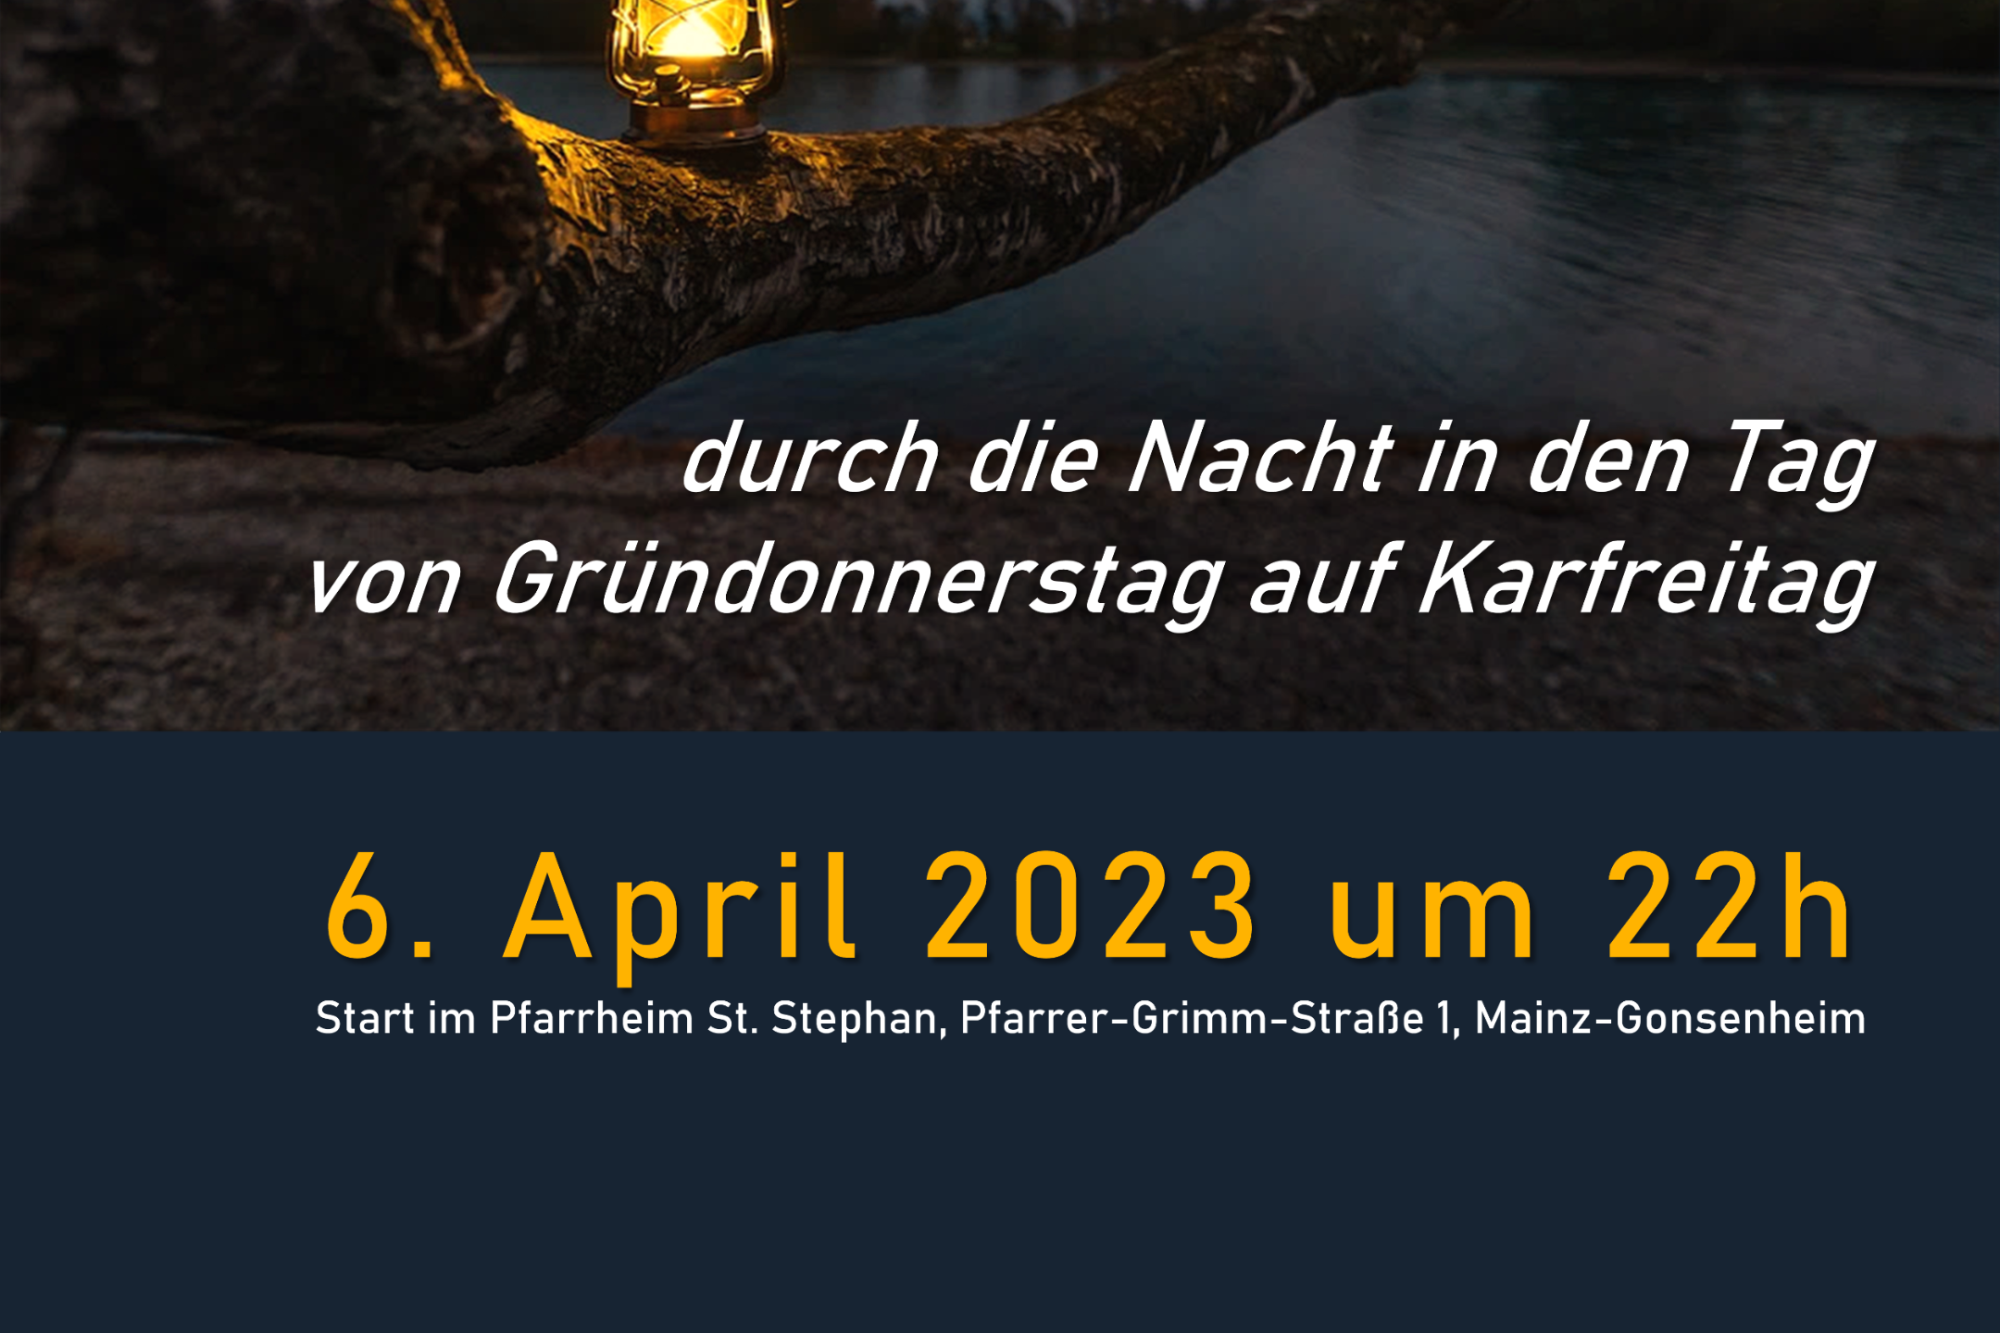 Gründonnerstag 2023 MW